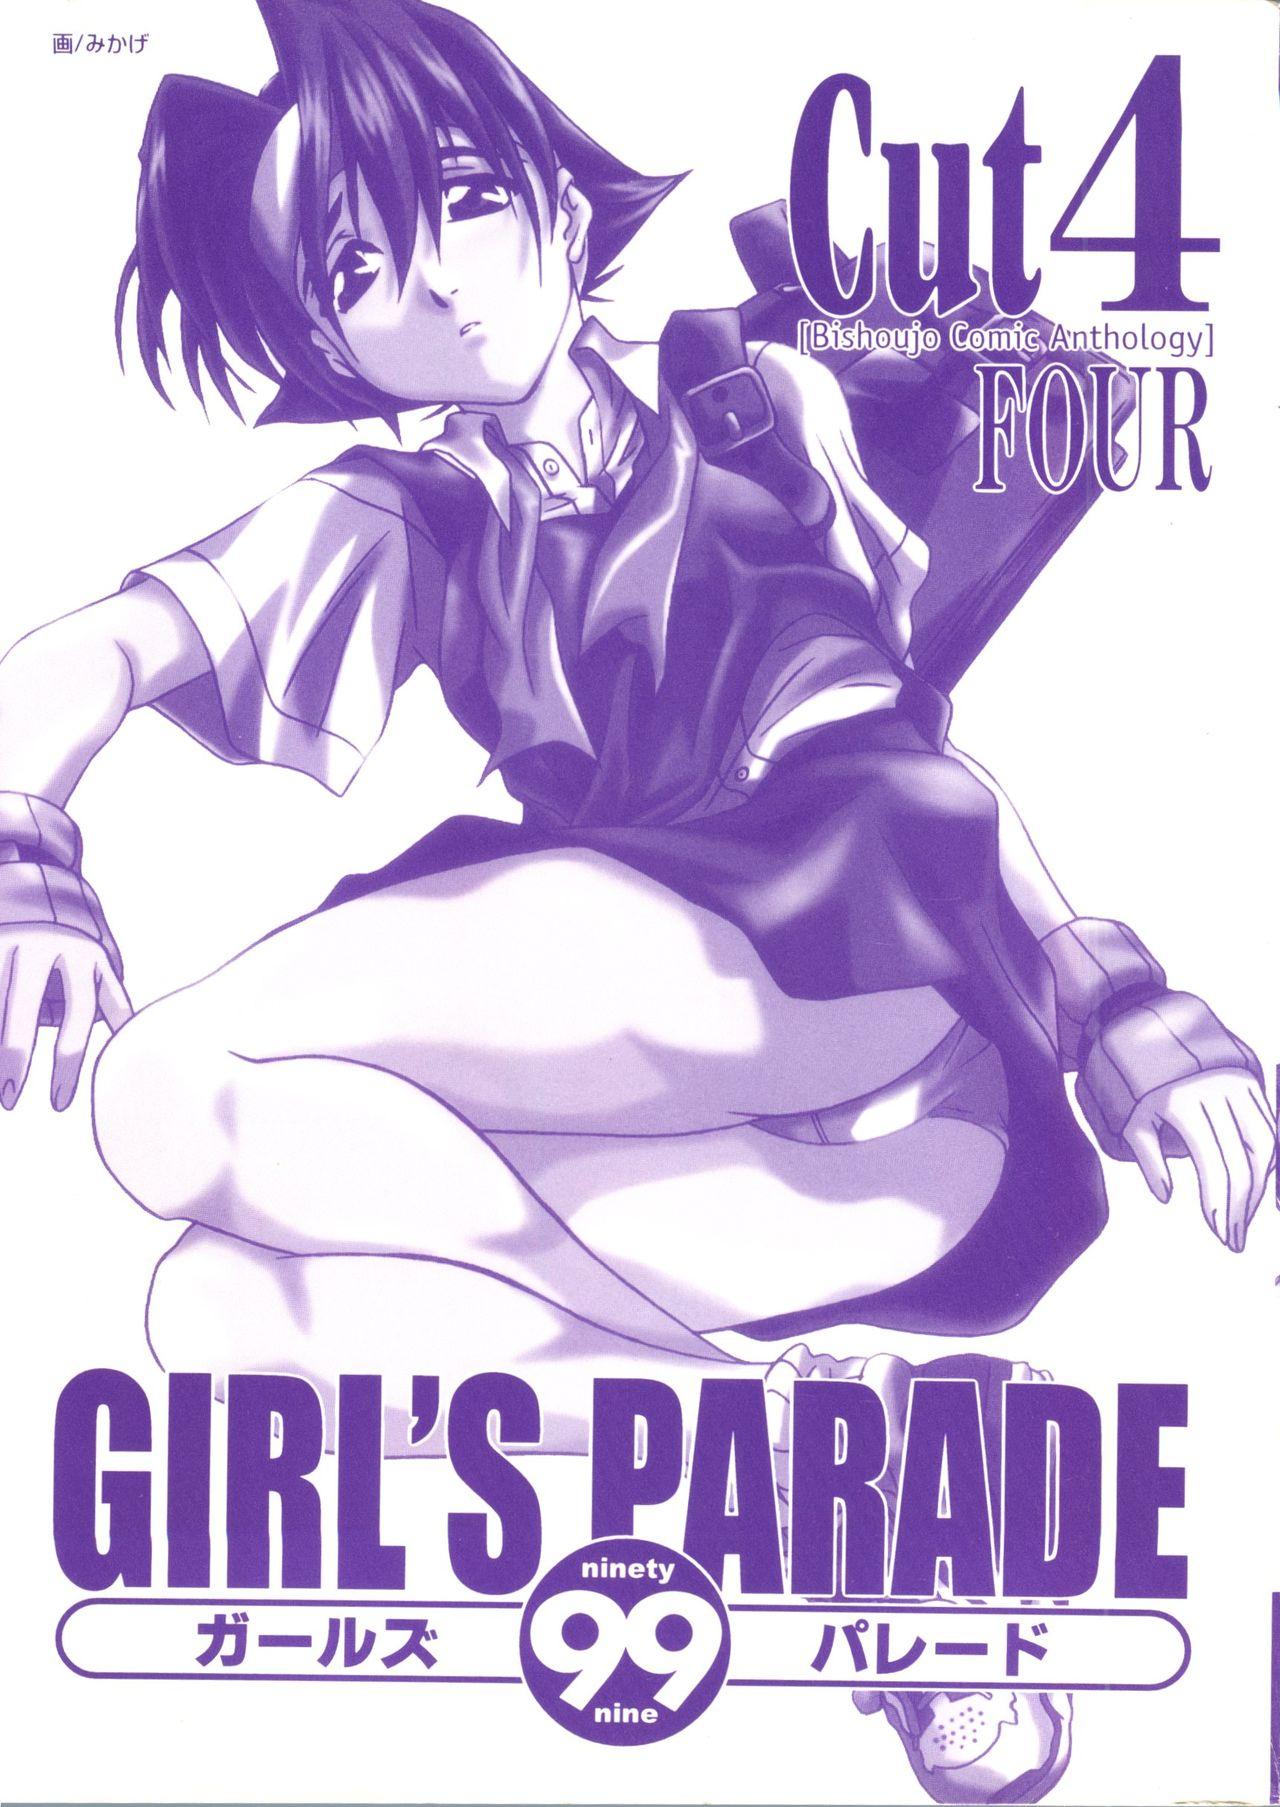 Cock Girl's Parade 99 Cut 4 - Samurai spirits Rival schools Revolutionary girl utena Star gladiator Gagging - Page 2